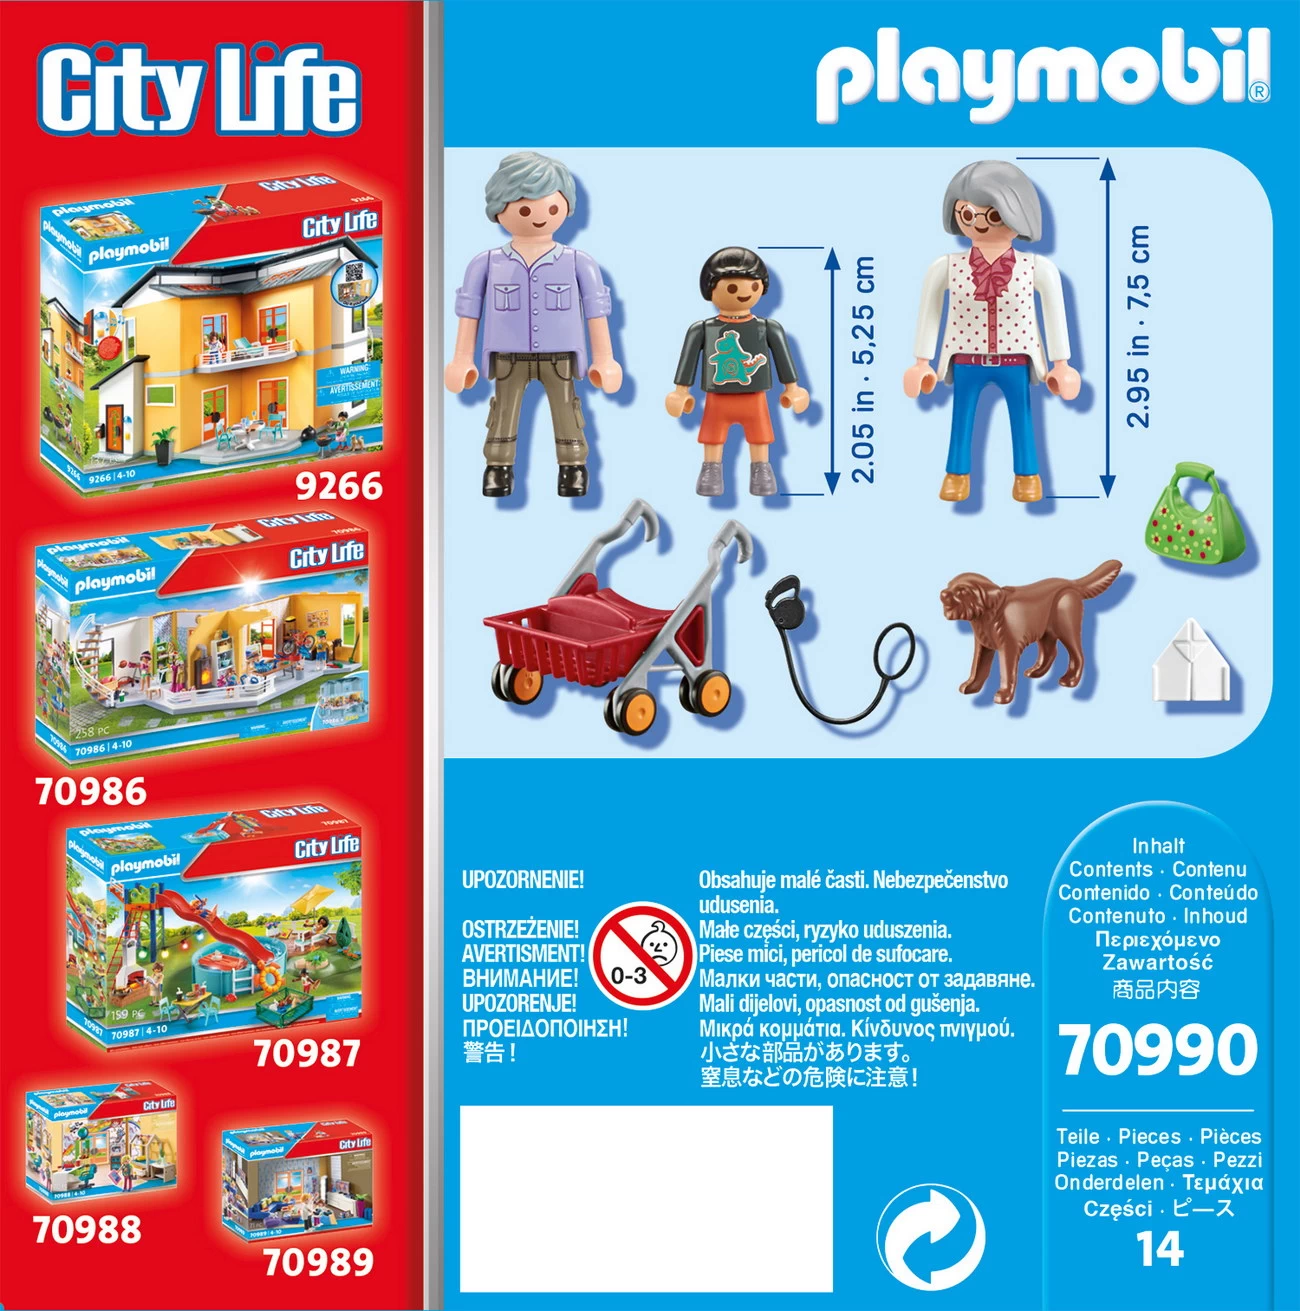 Playmobil 70990 - Großeltern mit Enkel (City Life)